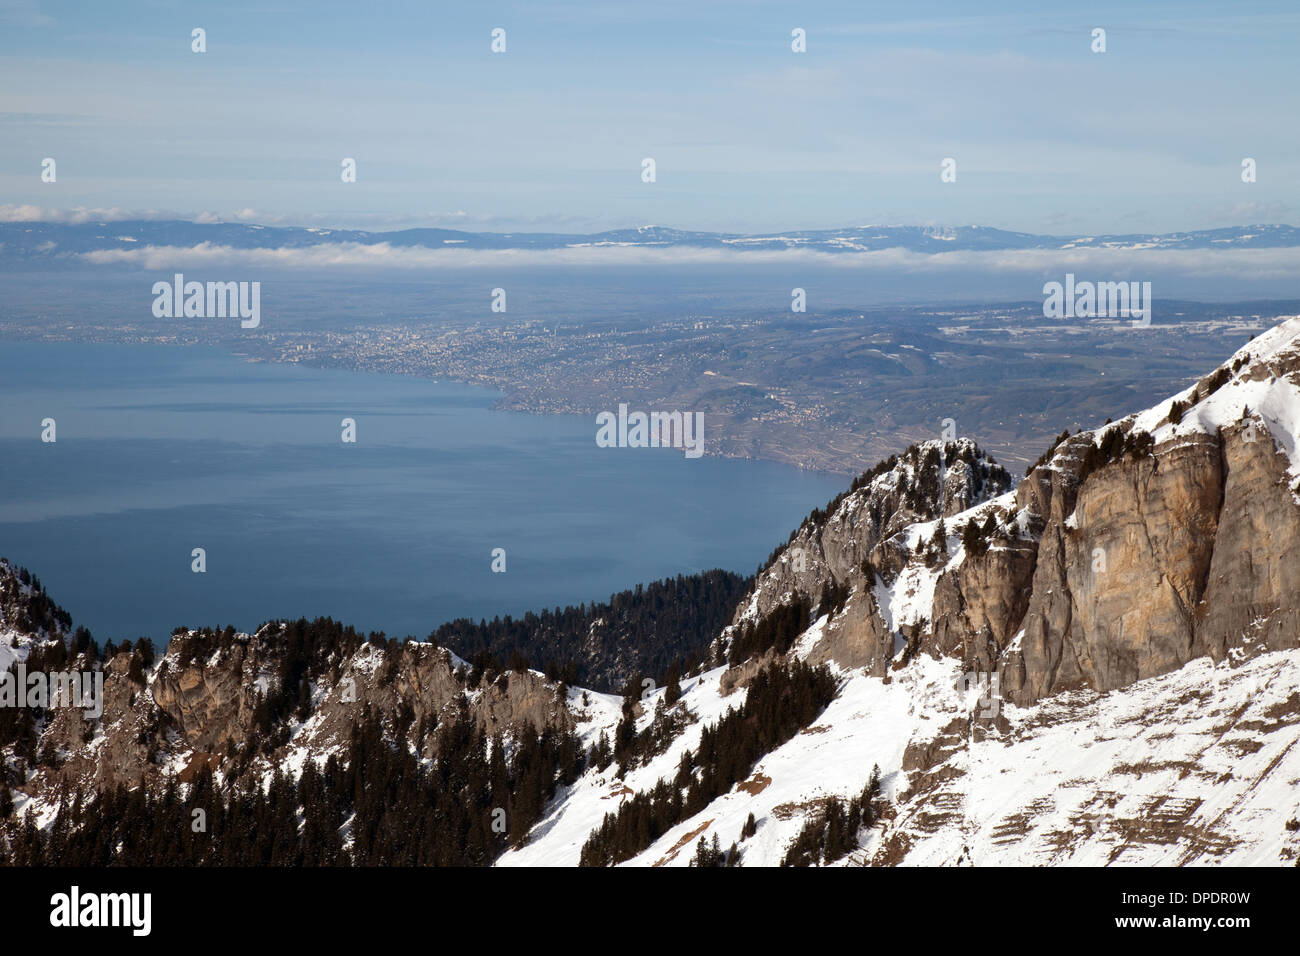 Lake Geneva ( Lac Leman ), Switzerland seen from La Berneuse mountain peak, landscape, Switzerland Europe Stock Photo